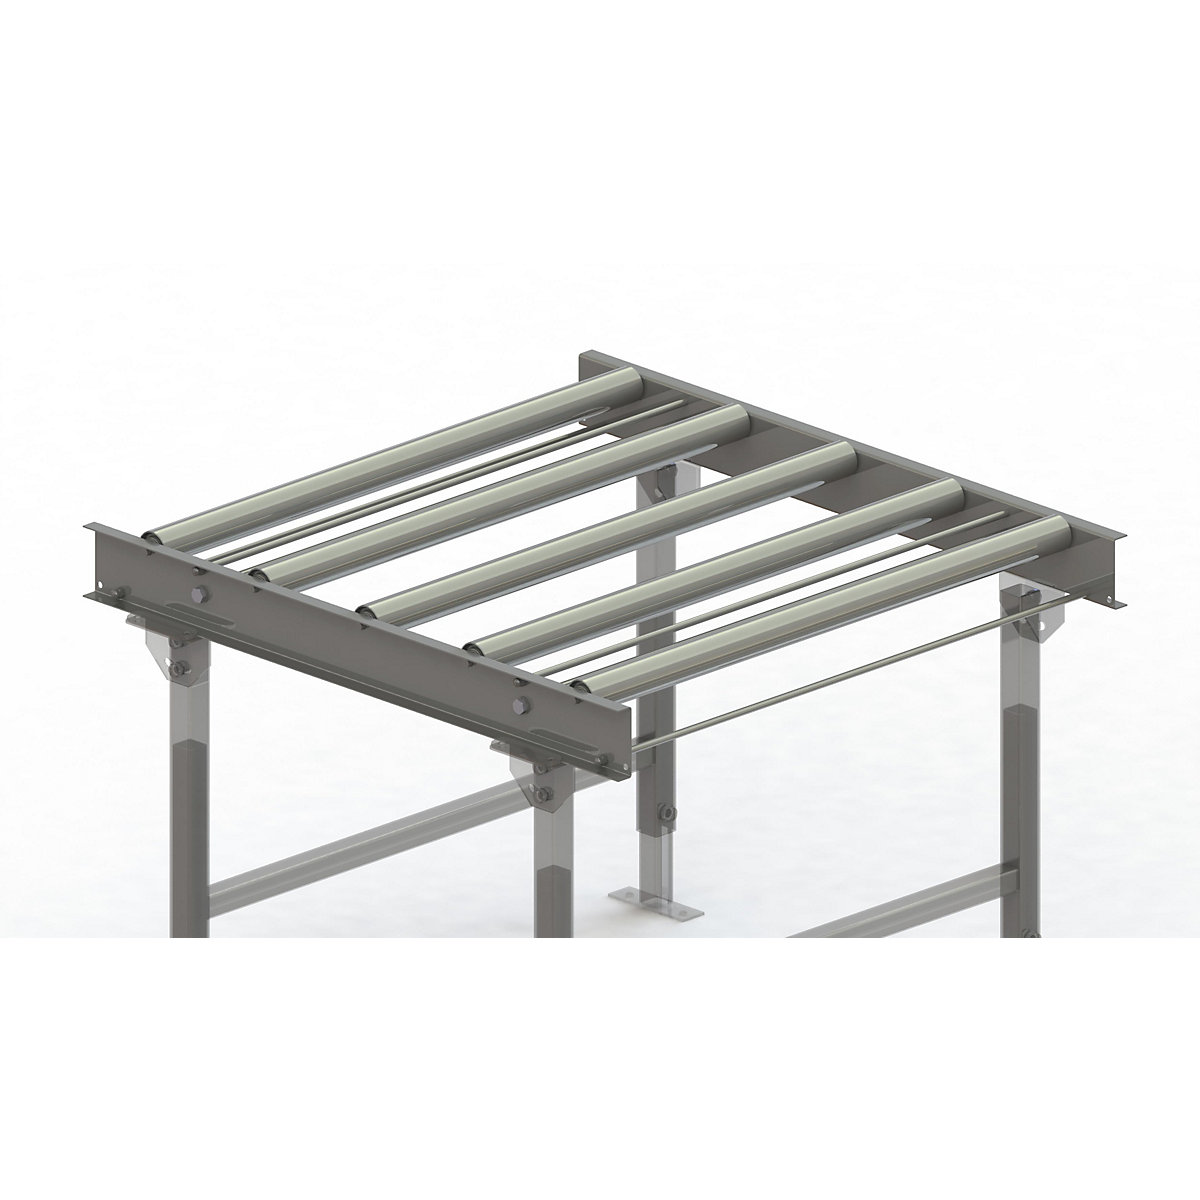 Roller conveyor, steel frame with zinc plated steel rollers – Gura